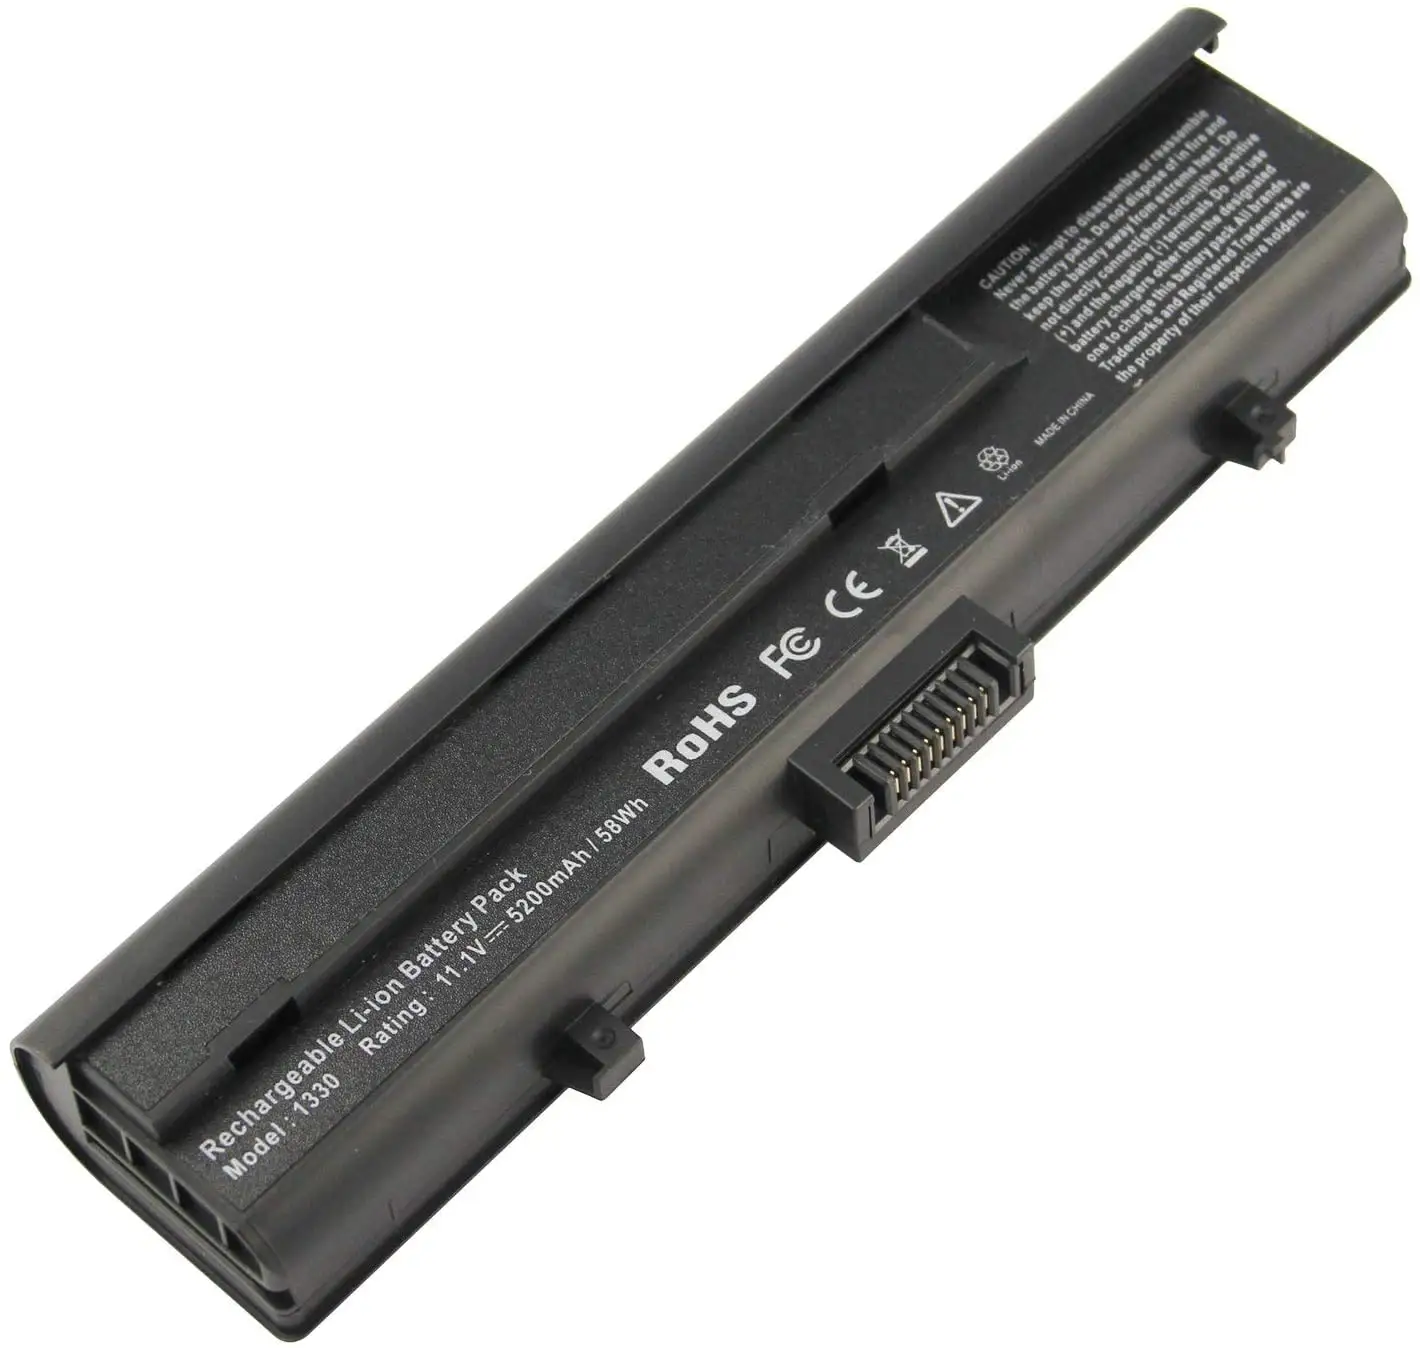 Batería de litio de 6 celdas para ordenador portátil, Pila de 11,1 V y 5200mAh para Dell XPS M1330 1330 Inspiron 13 1318 PU556 WR050 TT485 UM230